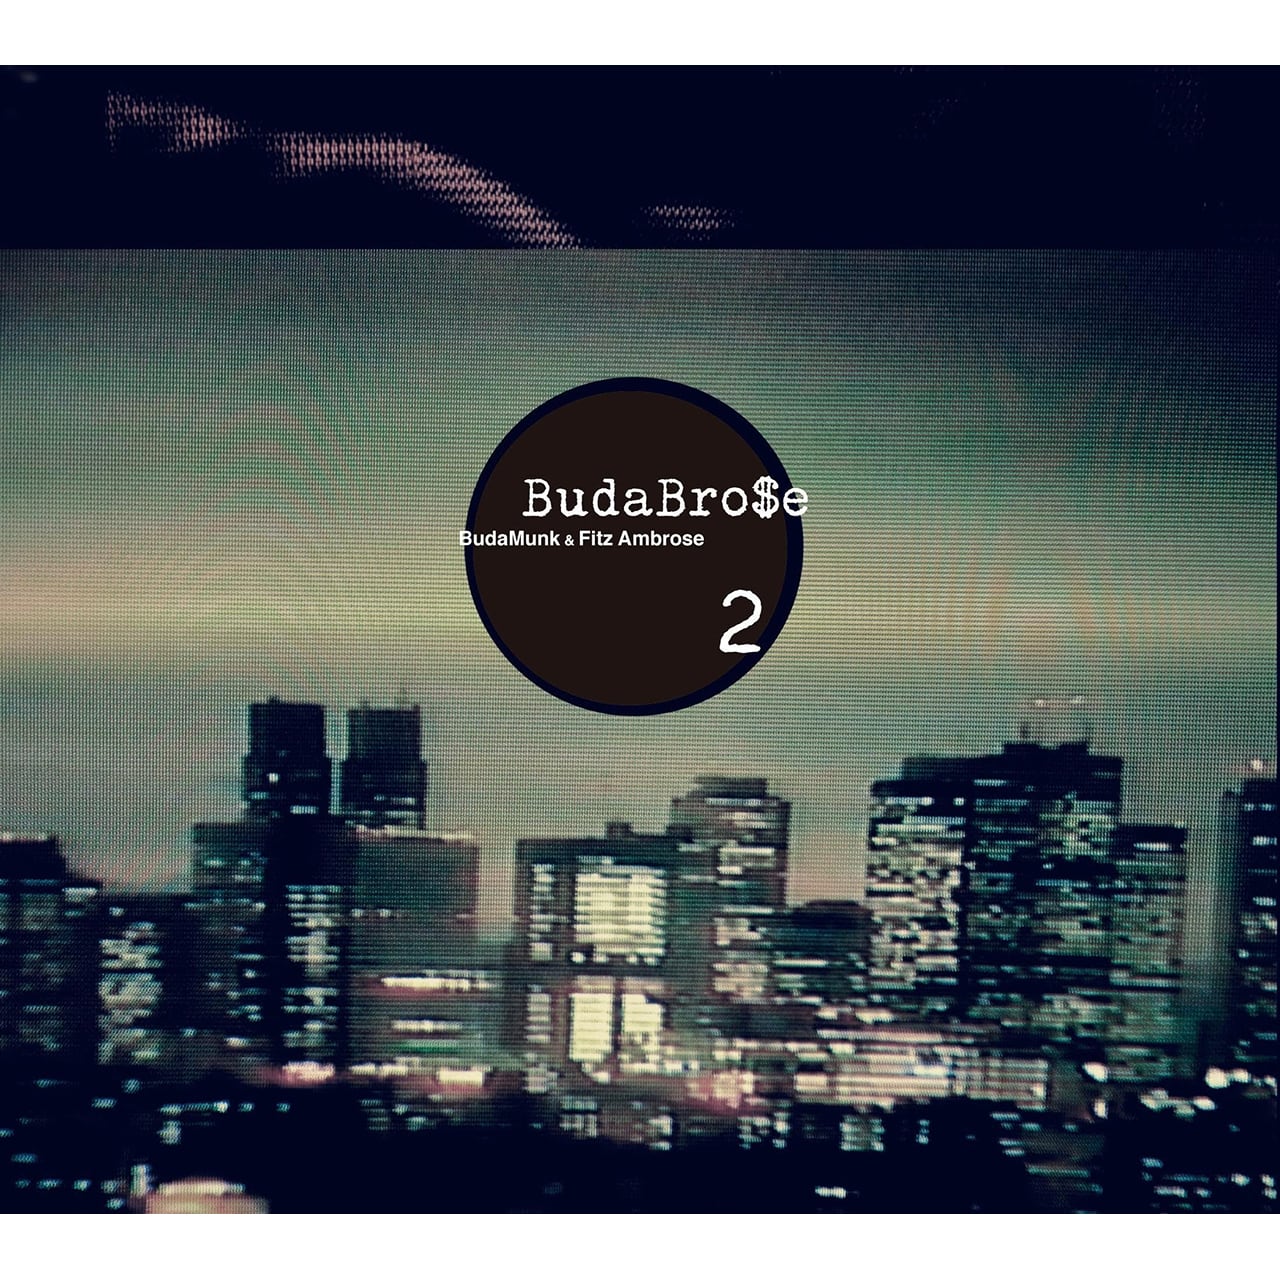 【CD】BudaBro$e (Budamunk & Fitz Ambro$e) - BudaBro$e 2